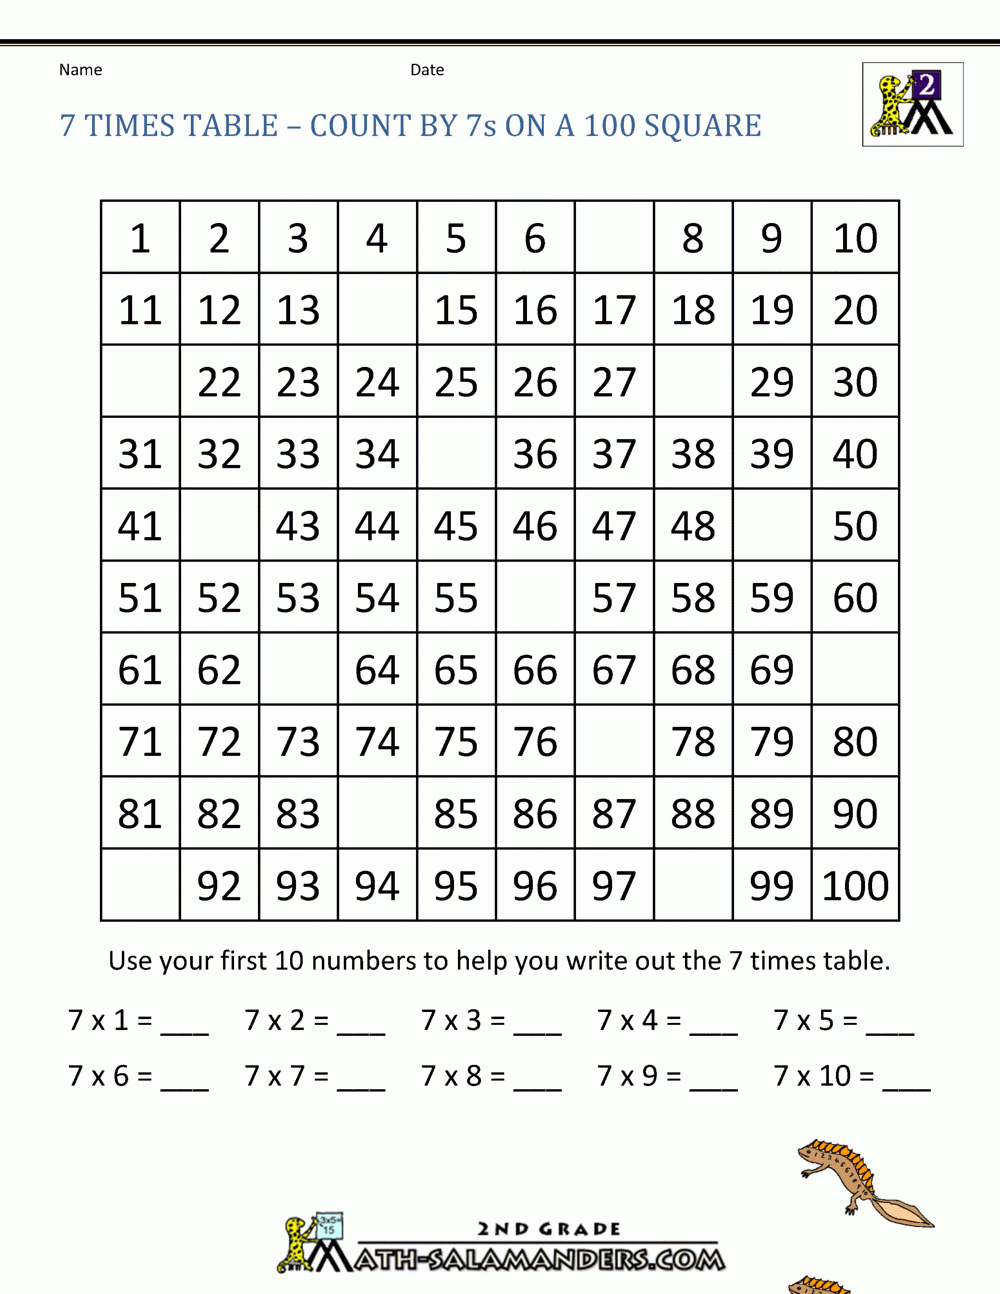 multiplication practice quizlet